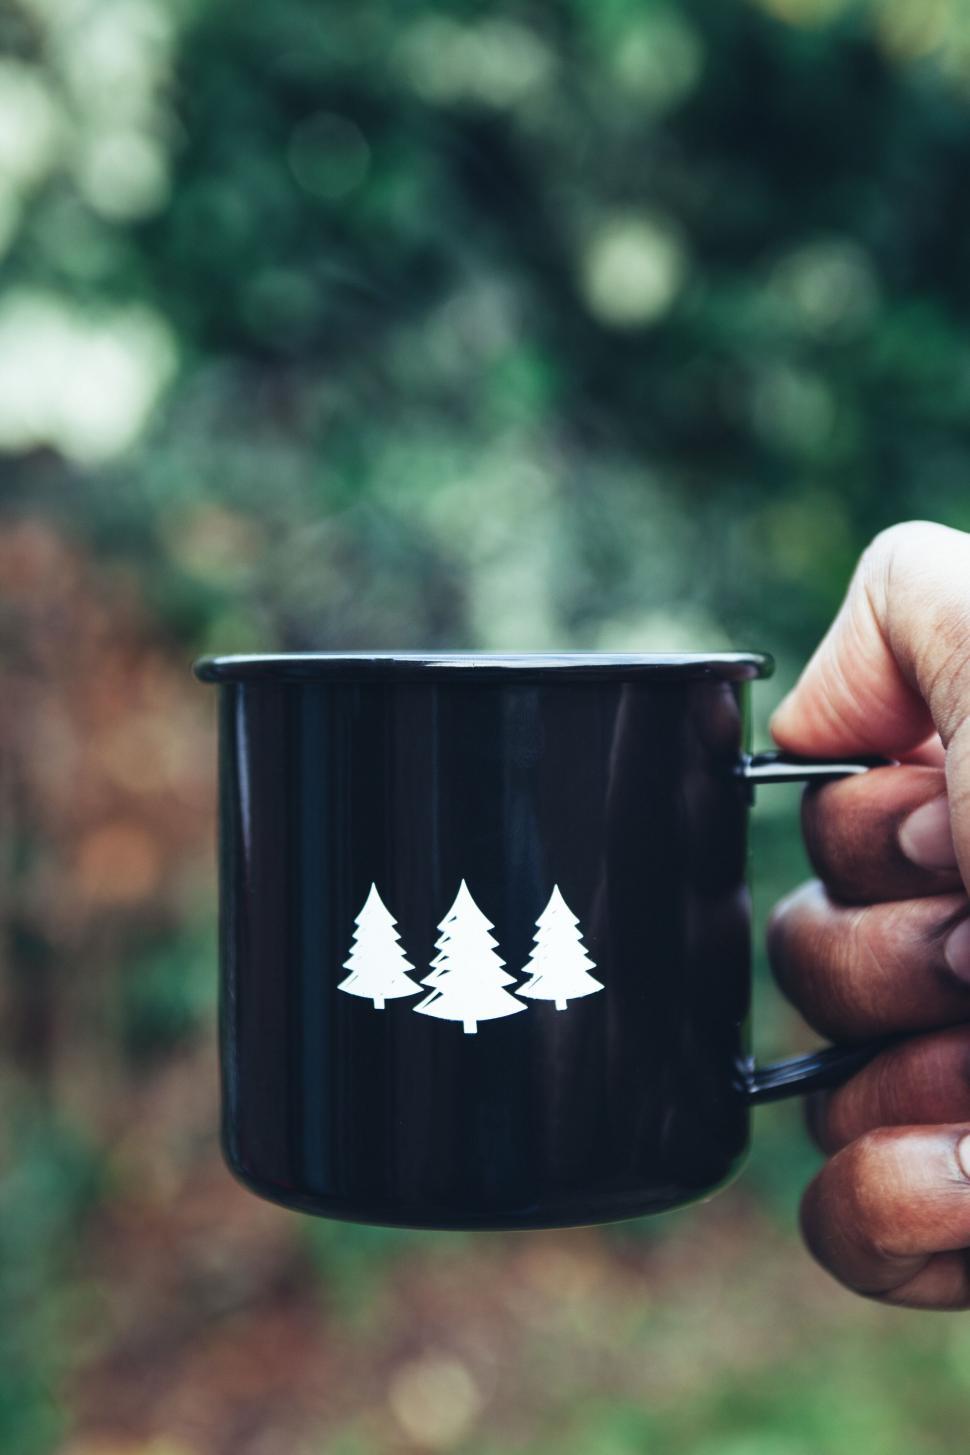 Free Image of Hand holding a black camping mug with tree logo 